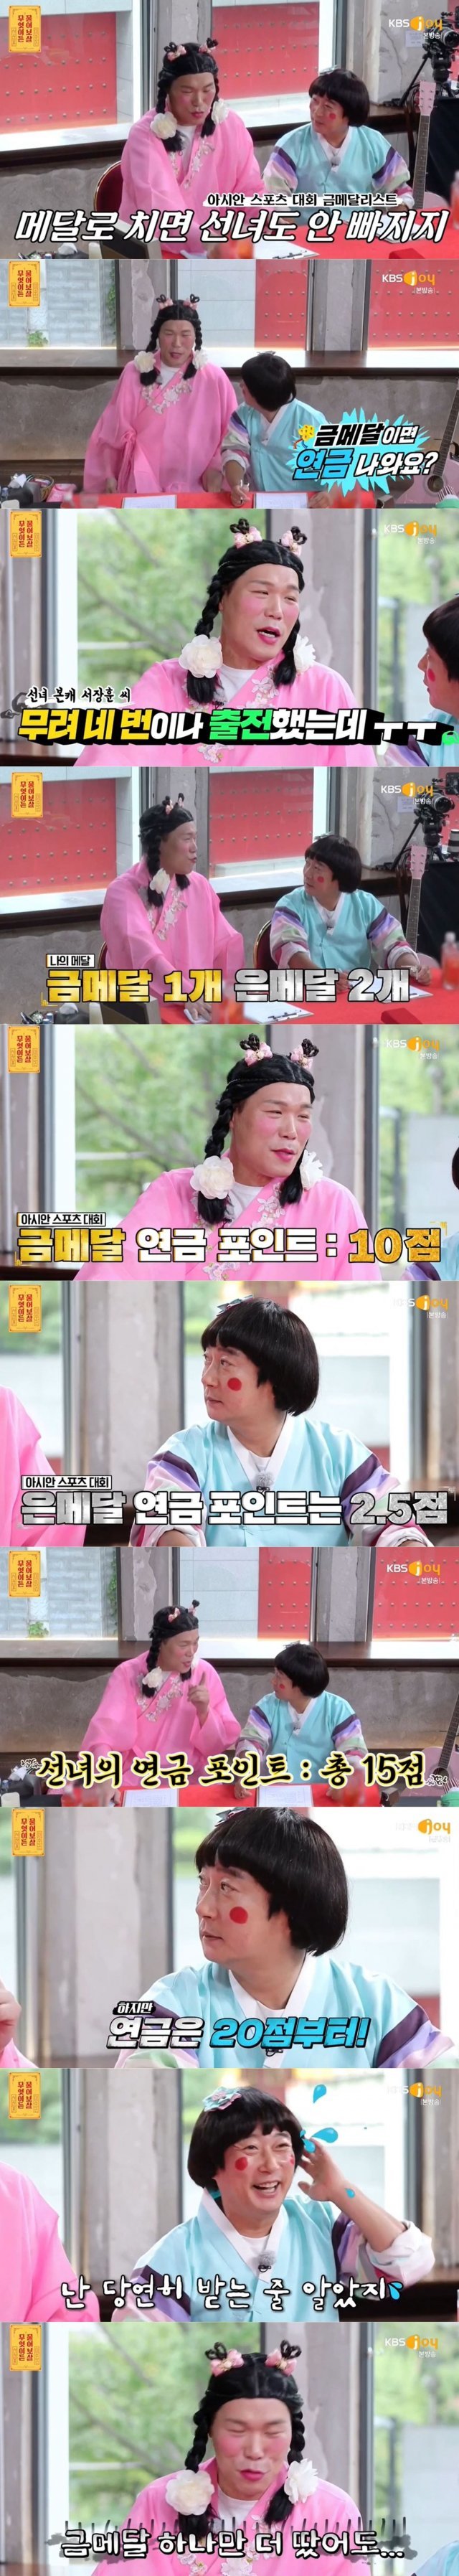 KBS joy 예능프로그램 ‘무엇이든 물어보살’ 방송 화면 갈무리 © 뉴스1